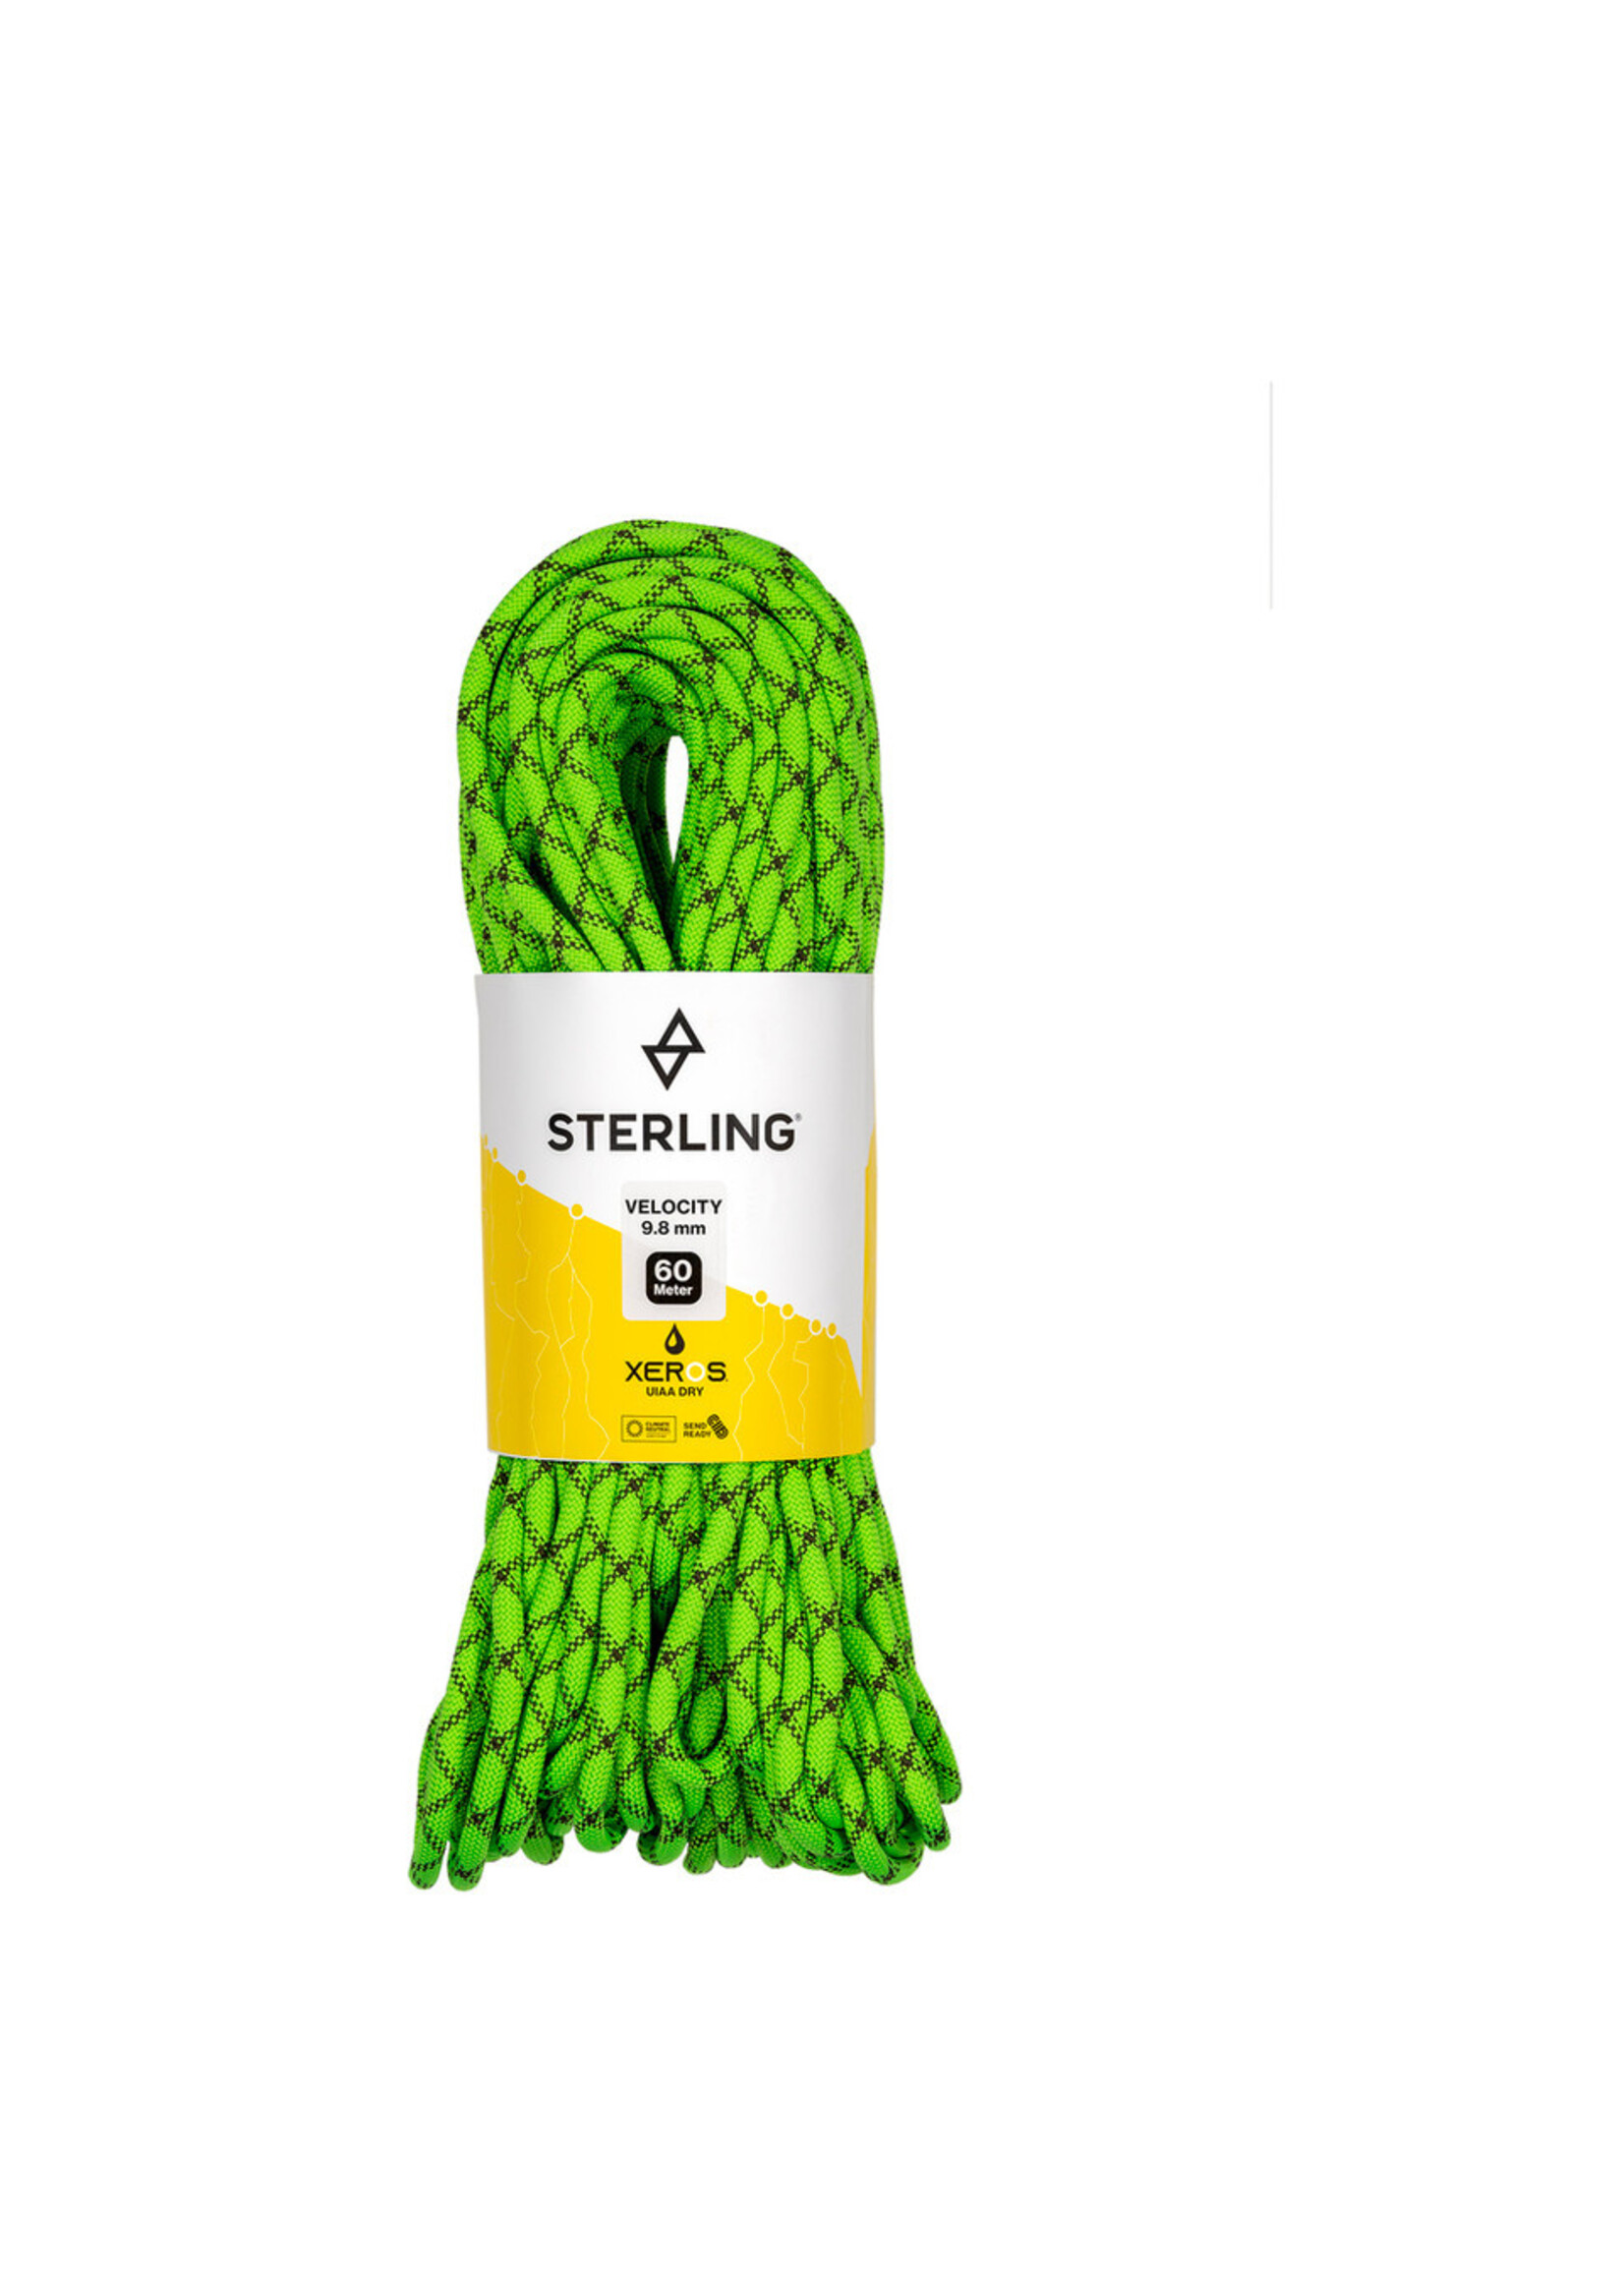 Corde d'escalade Sterling Velocity 9.8 Xeros Dry